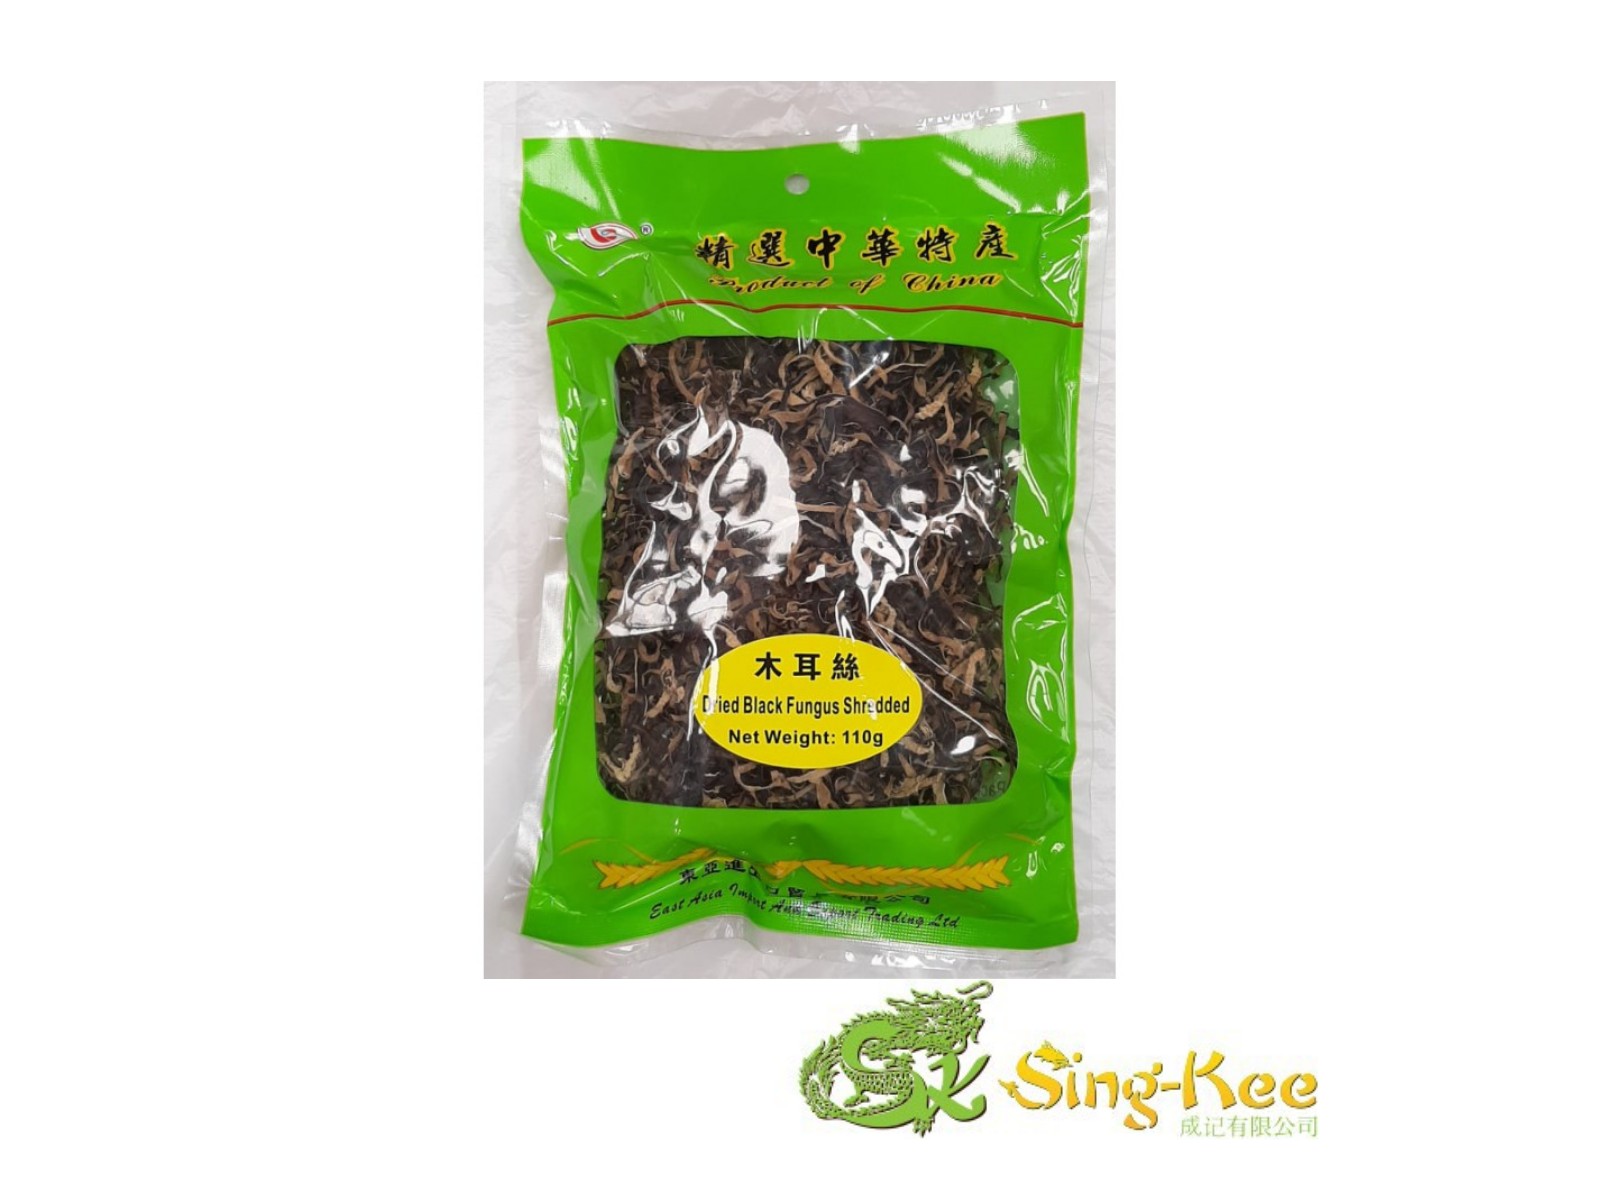 East Asia Dried Shredded Black Fungus 110g - Dried Foods, Nuts & Se...